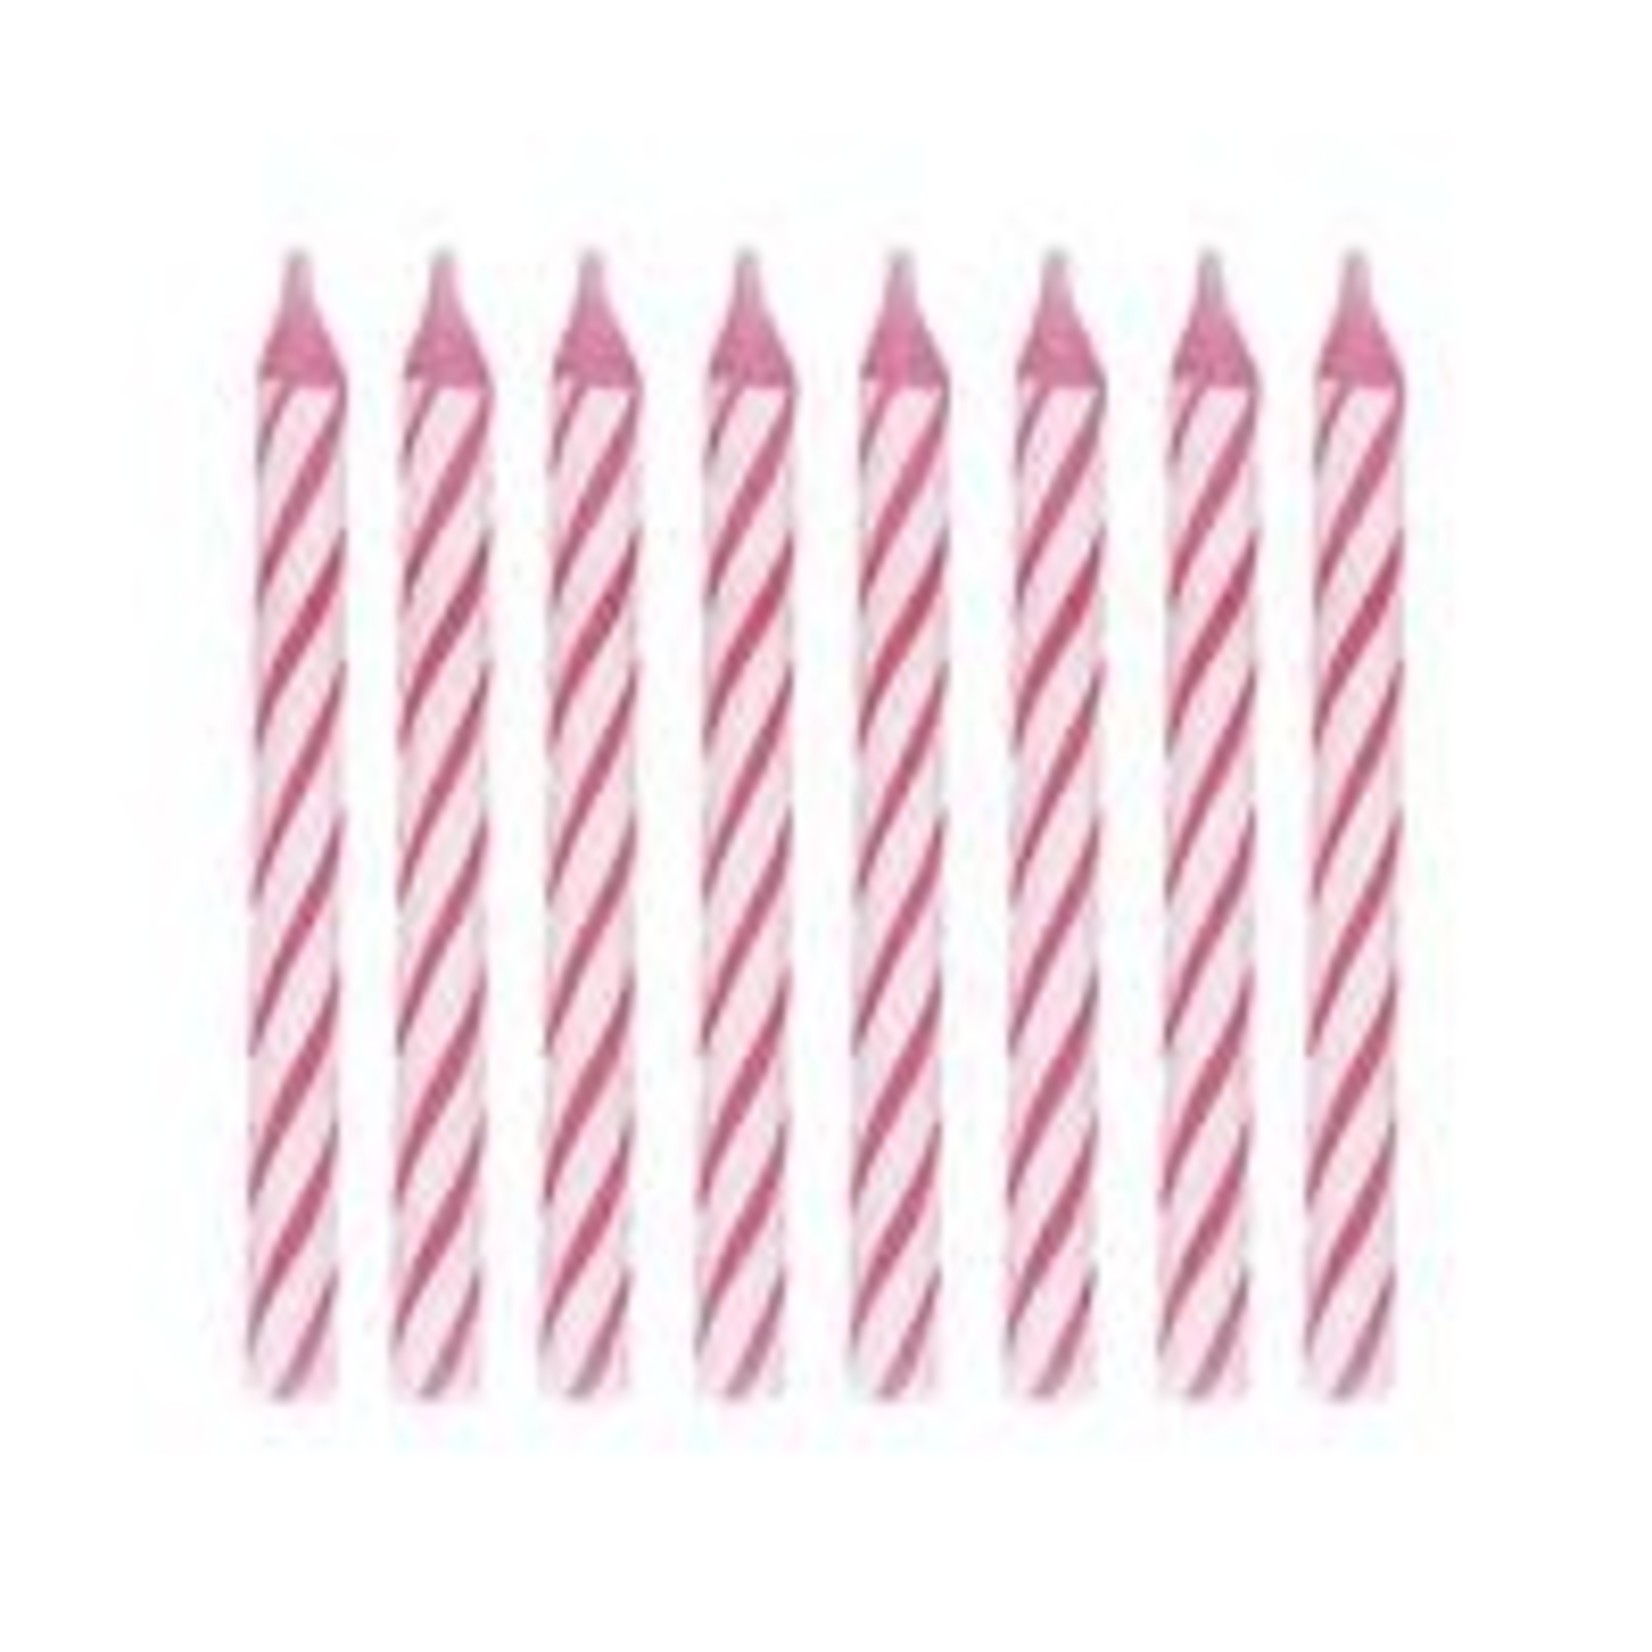 unique Pink Spiral Birthday Candles - 24ct.